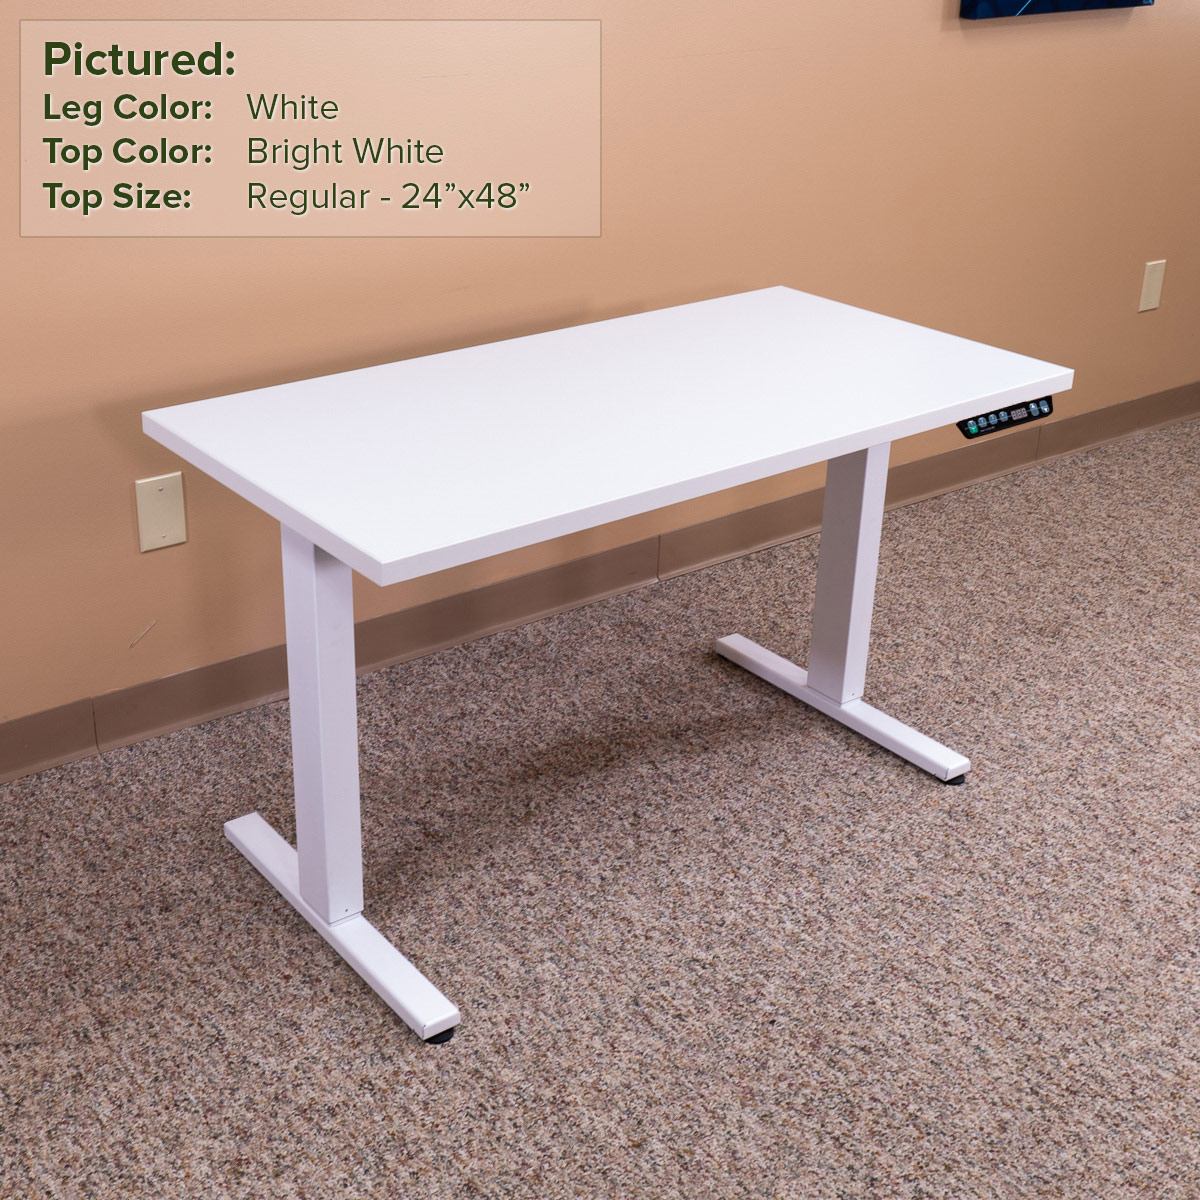 Crandall-Office-Furniture-ErgomatIQ Height-Adjustable-Desk-006